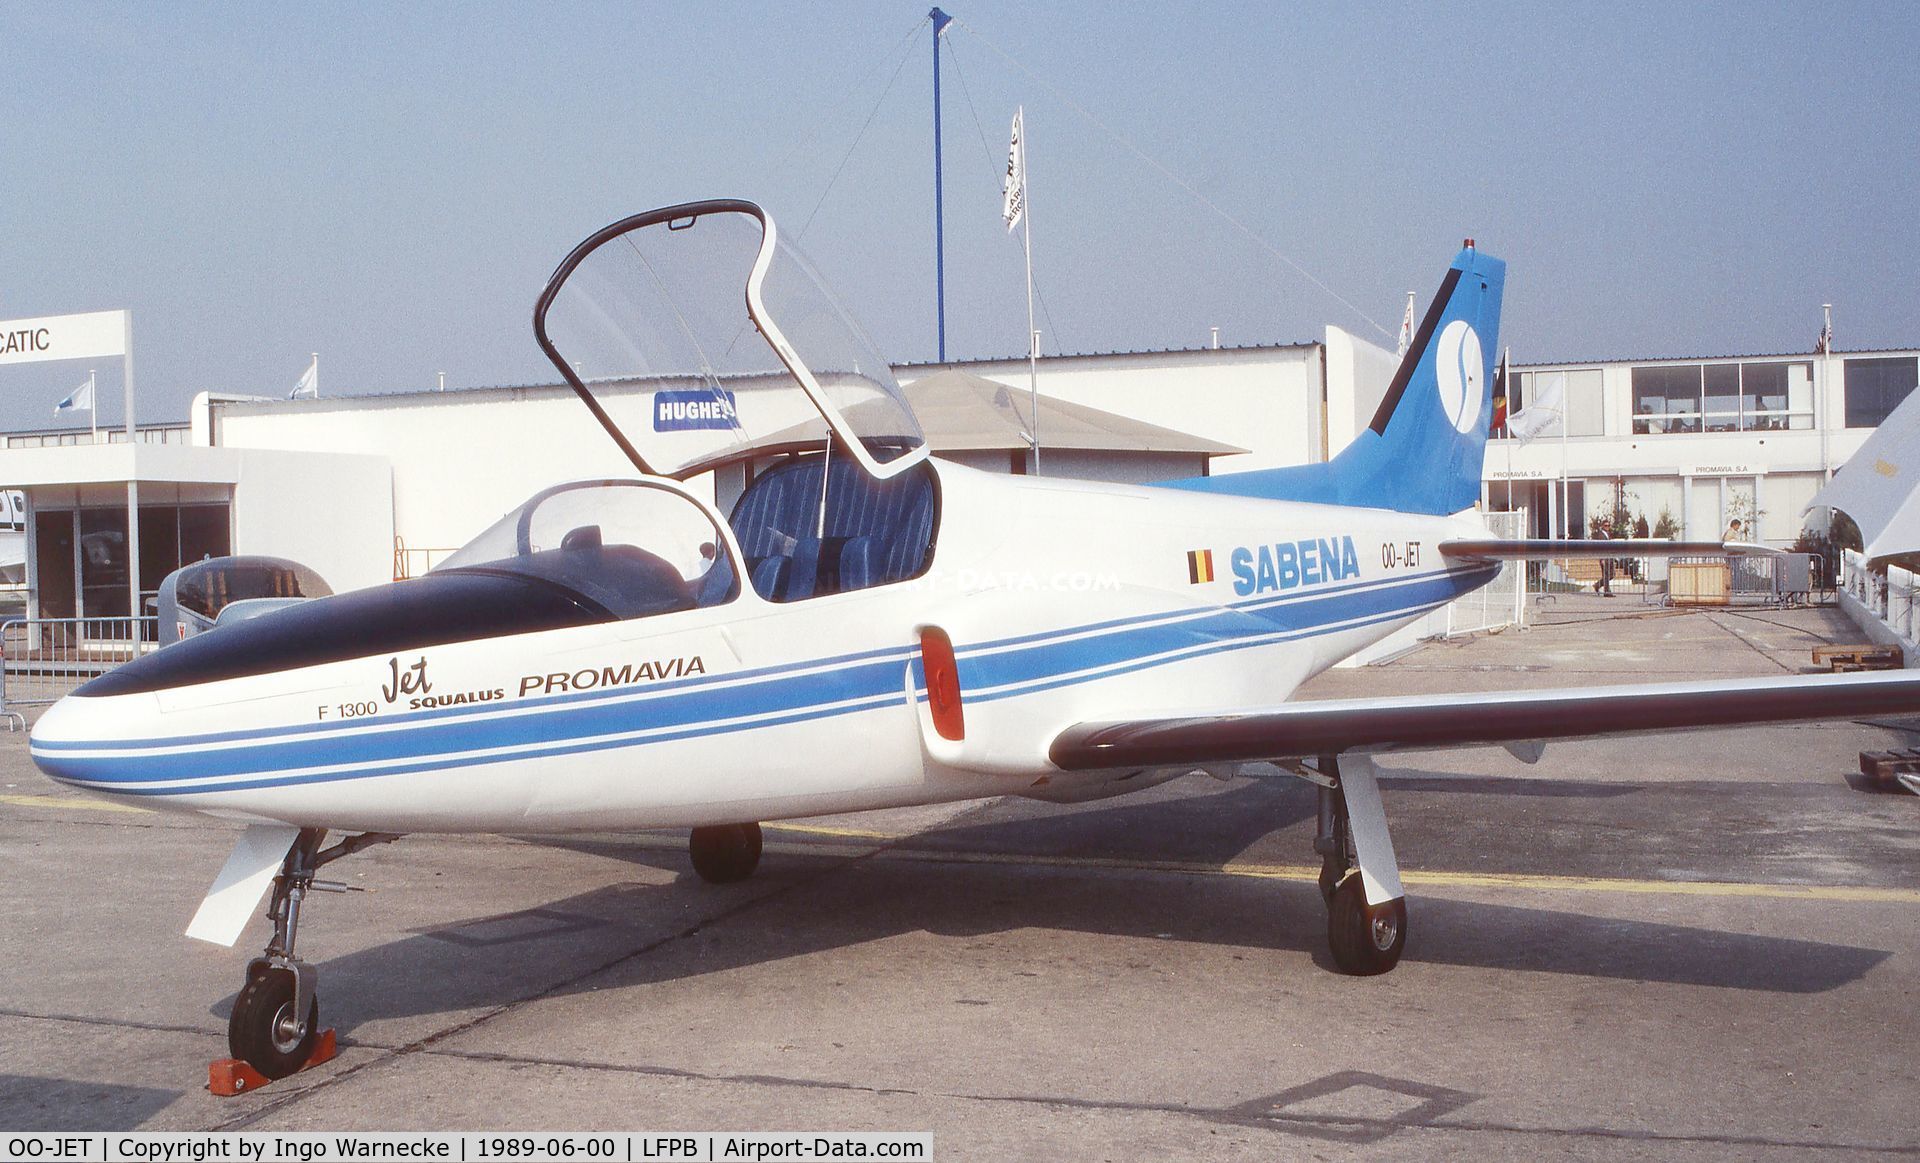 OO-JET, Promavia F.1300 Jet Squalus C/N 002, Promavia F.1300 Jet Squalus (probably never flown) at the Aerosalon 1989 Paris